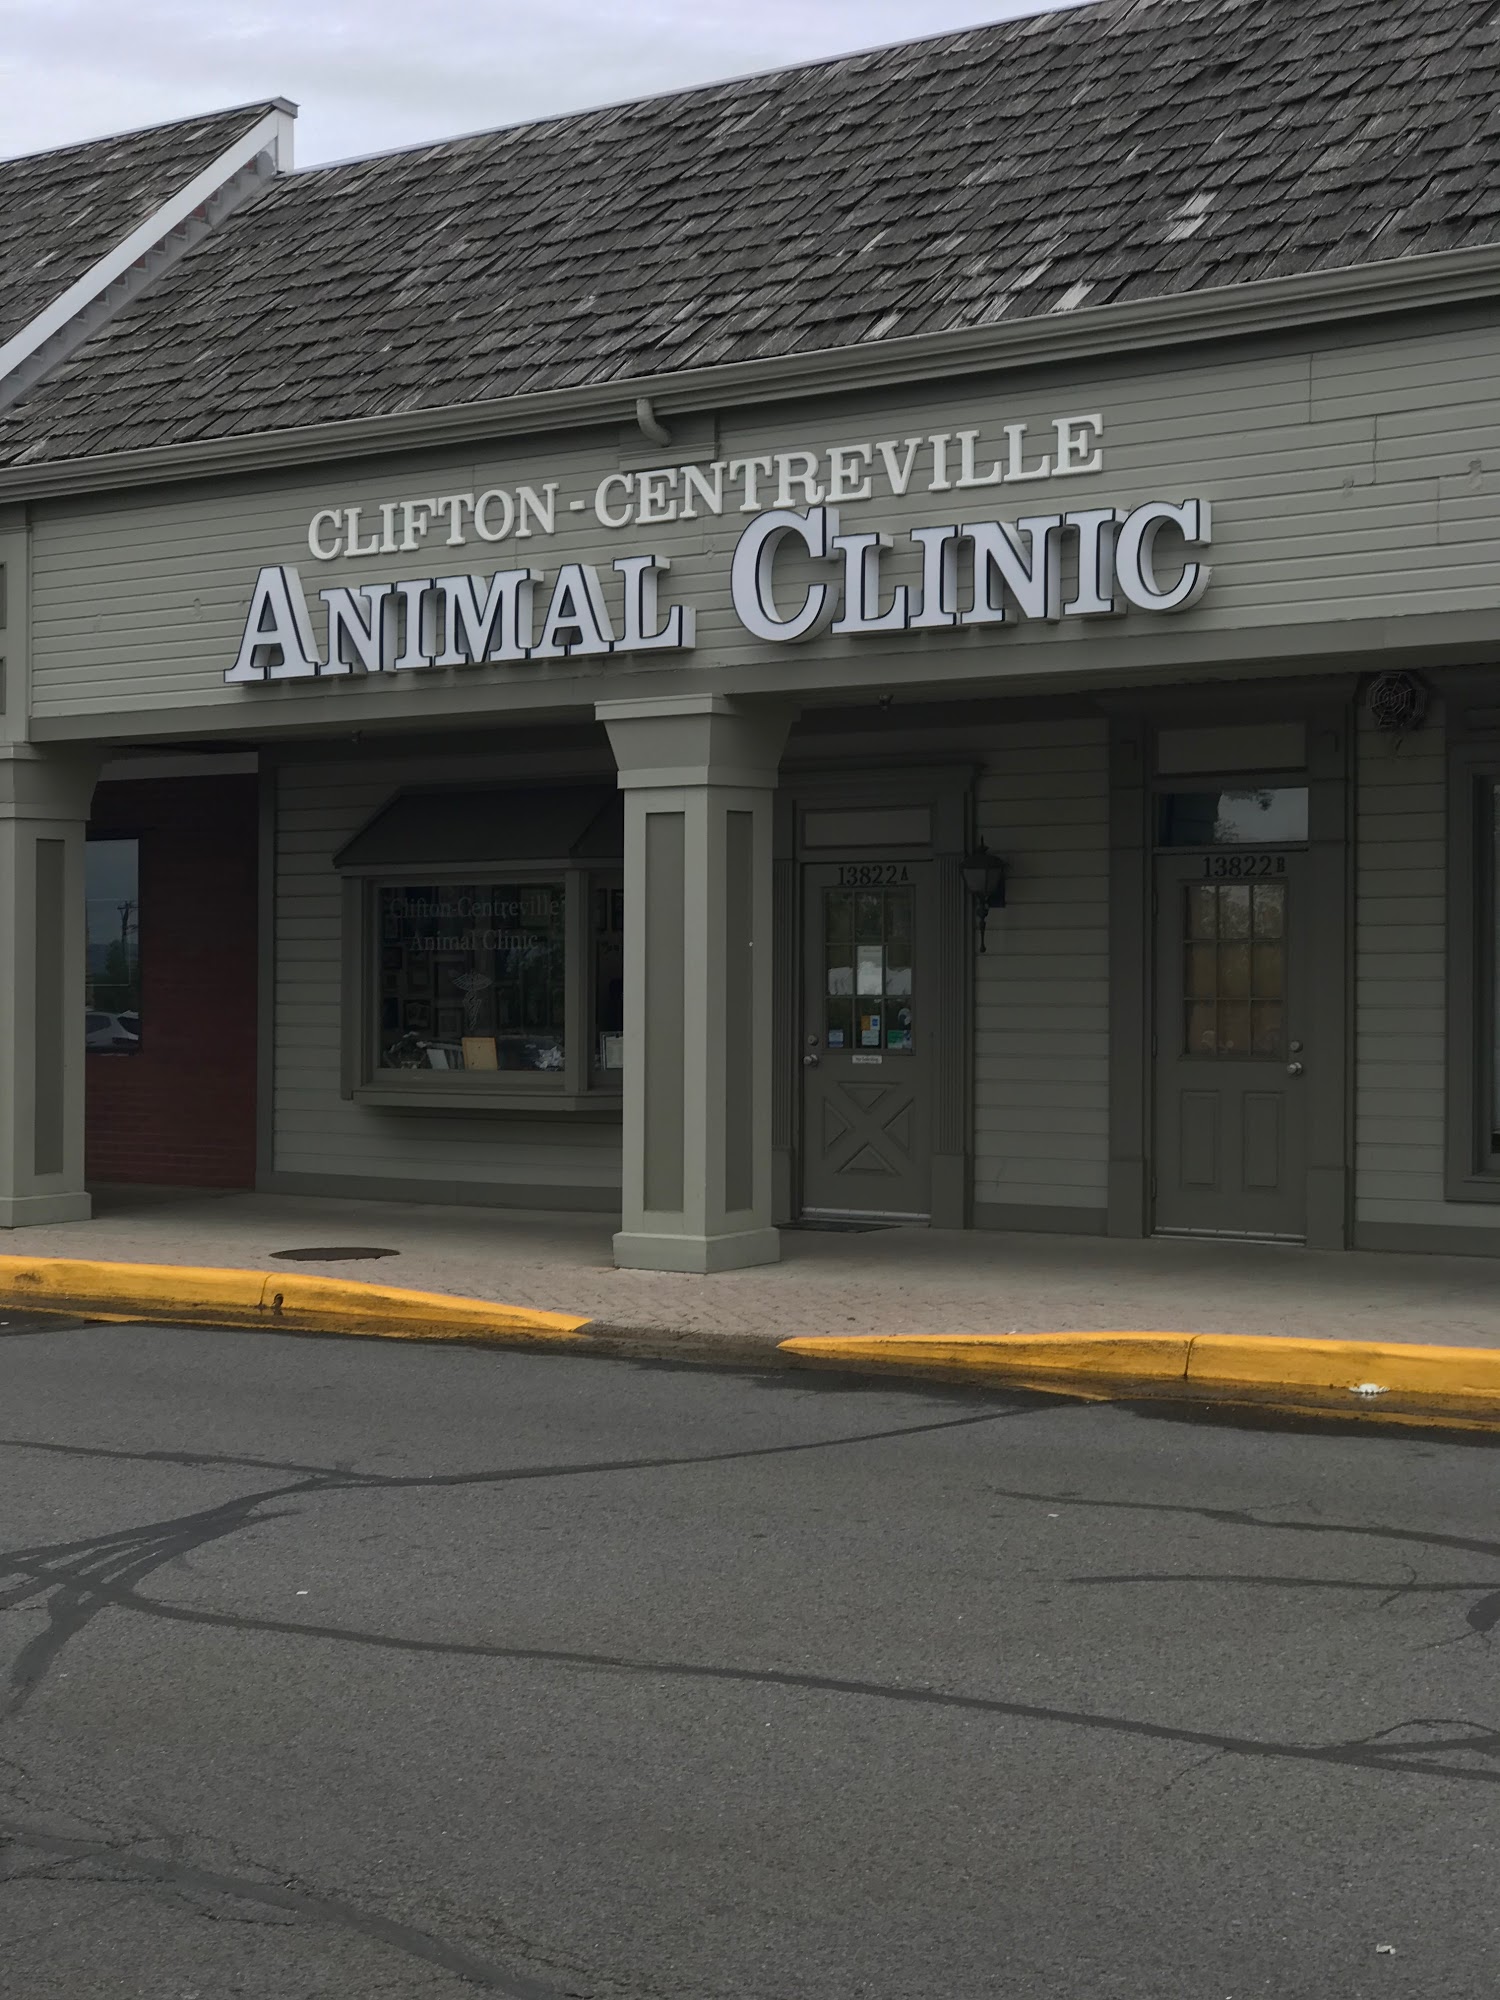 Clifton-Centreville Animal Clinic